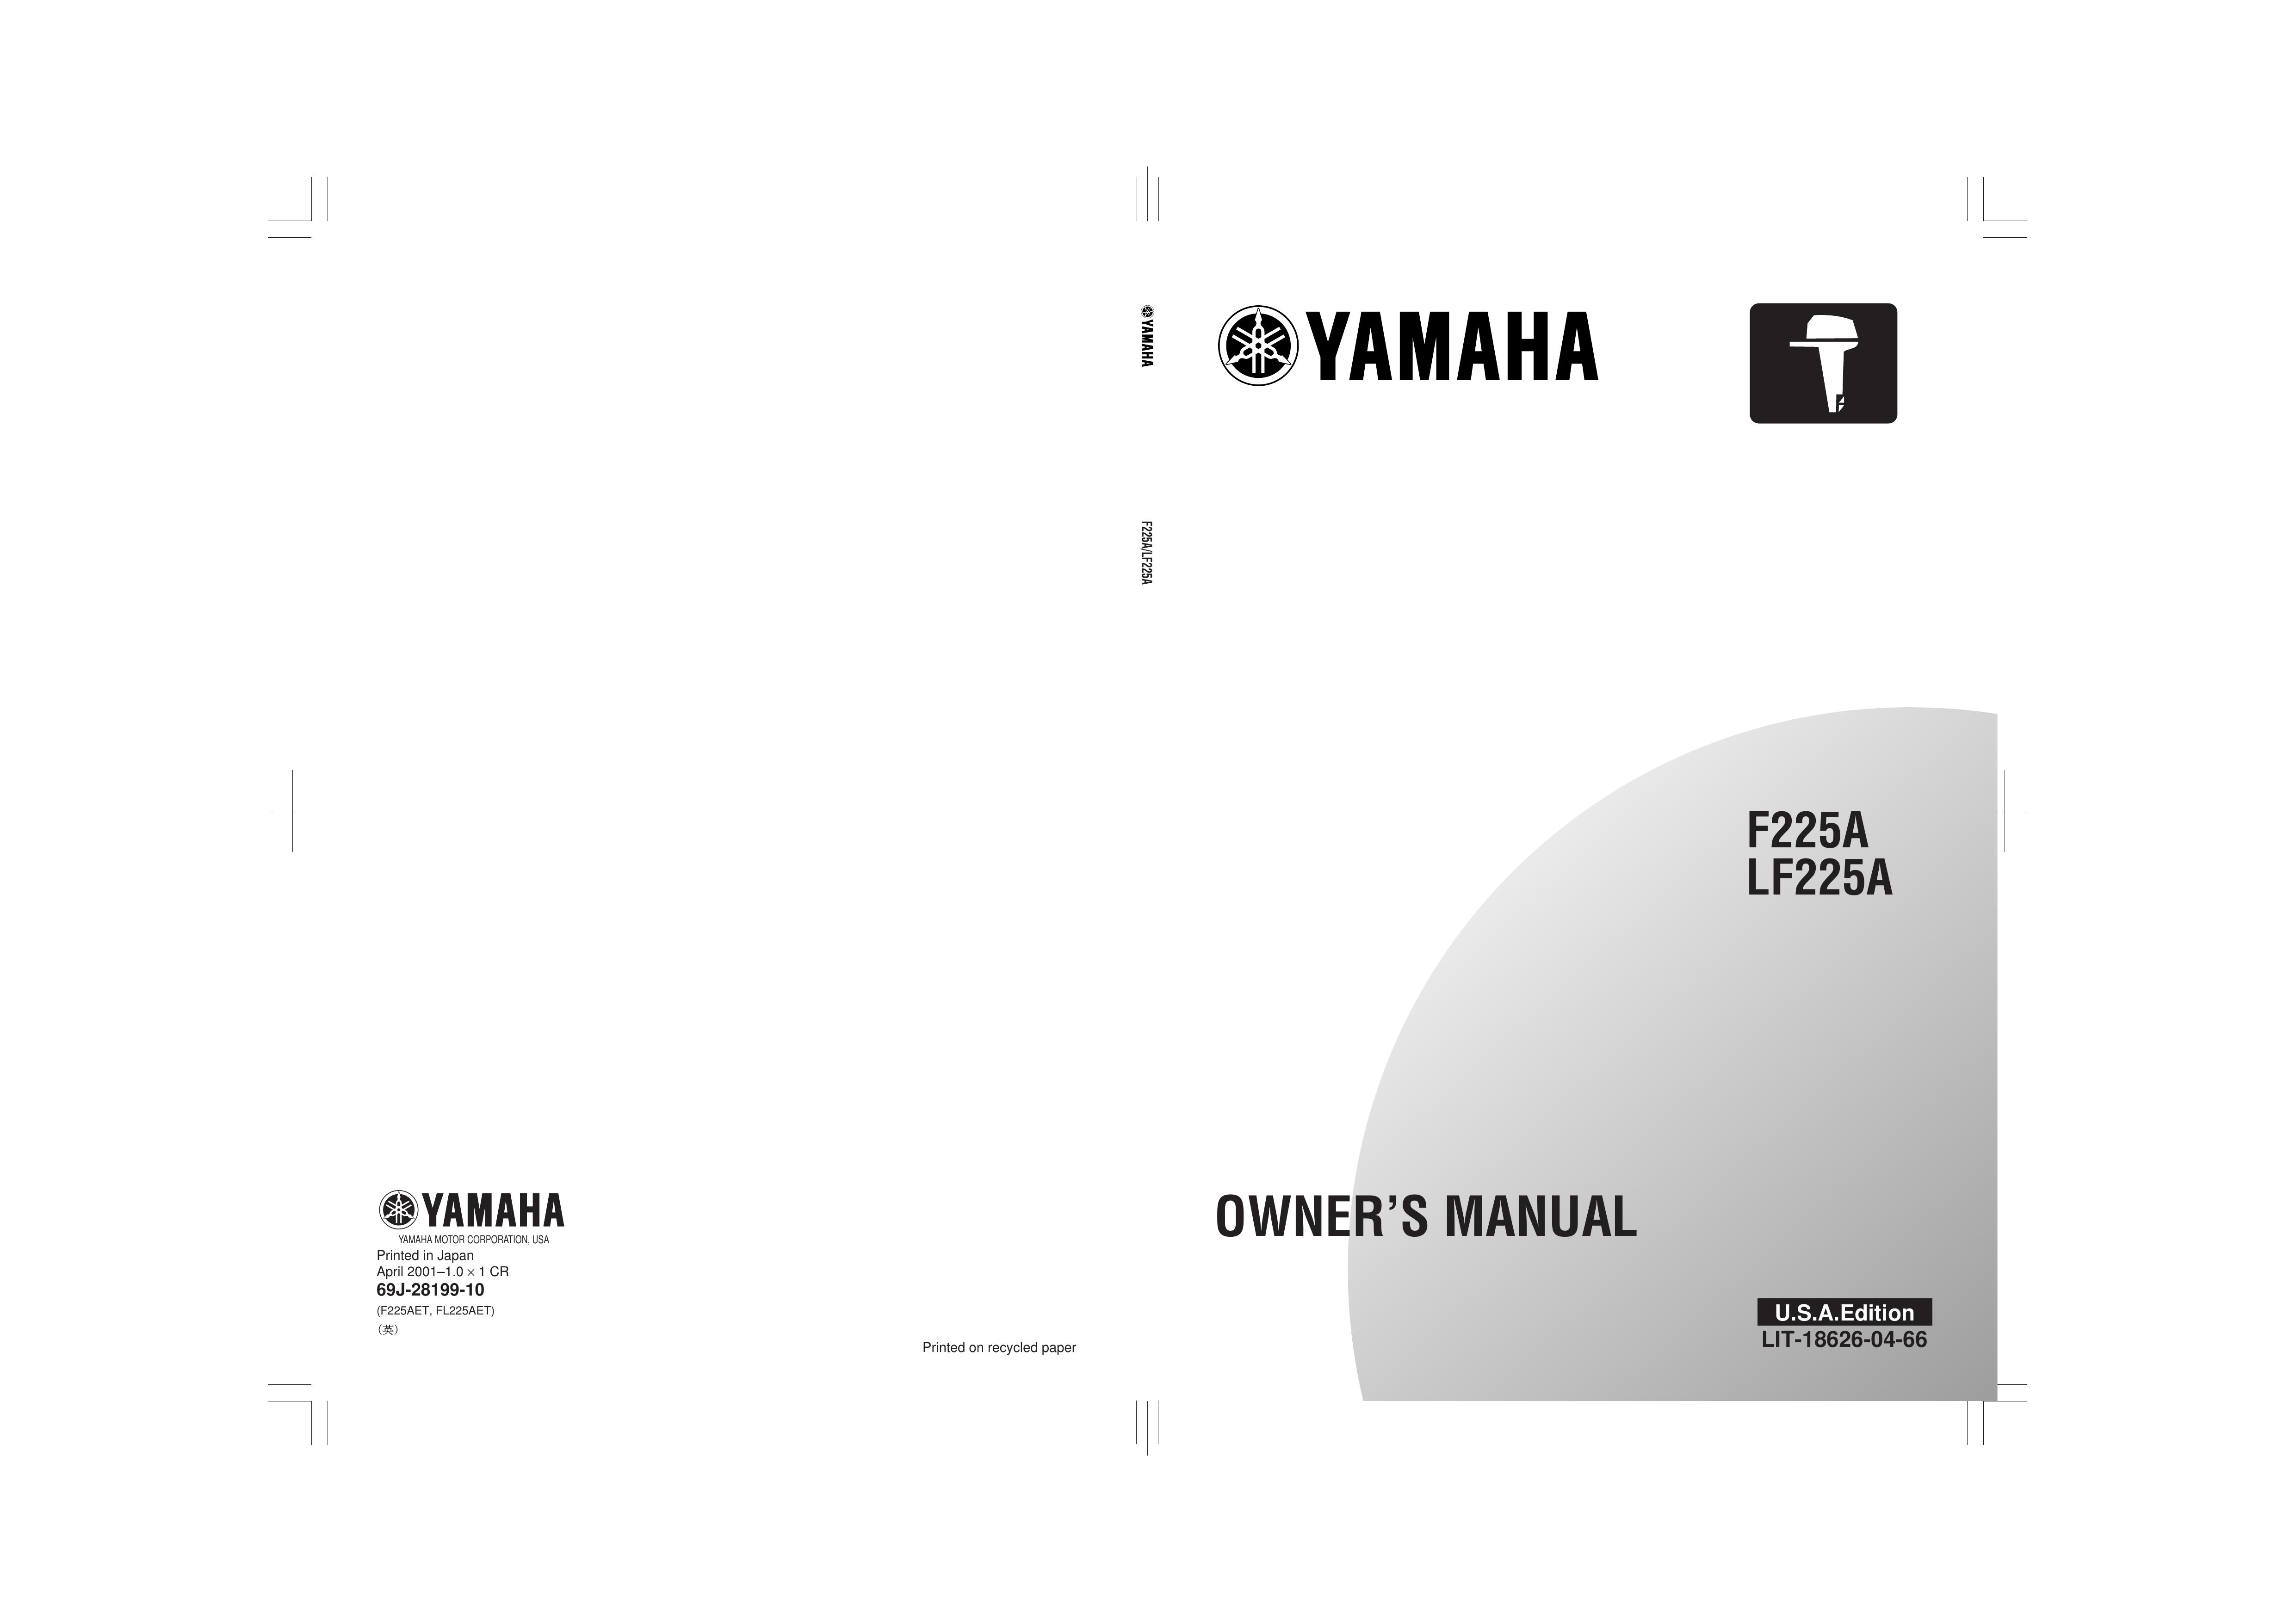 Yamaha LF225A Outboard Motor User Manual